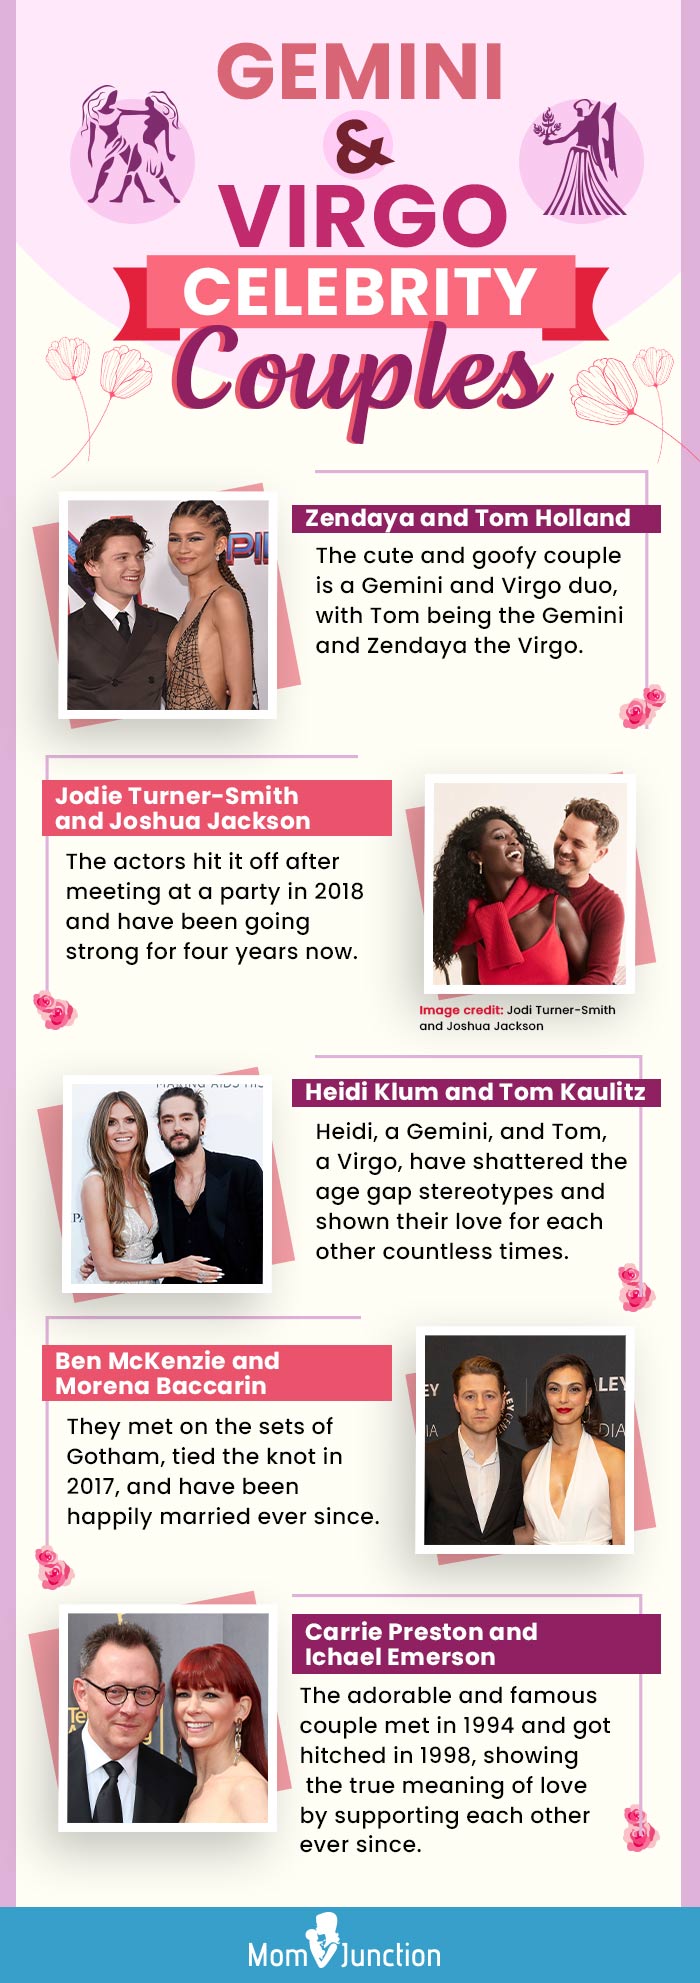 gemini and virgo celebrity couples [infographic]